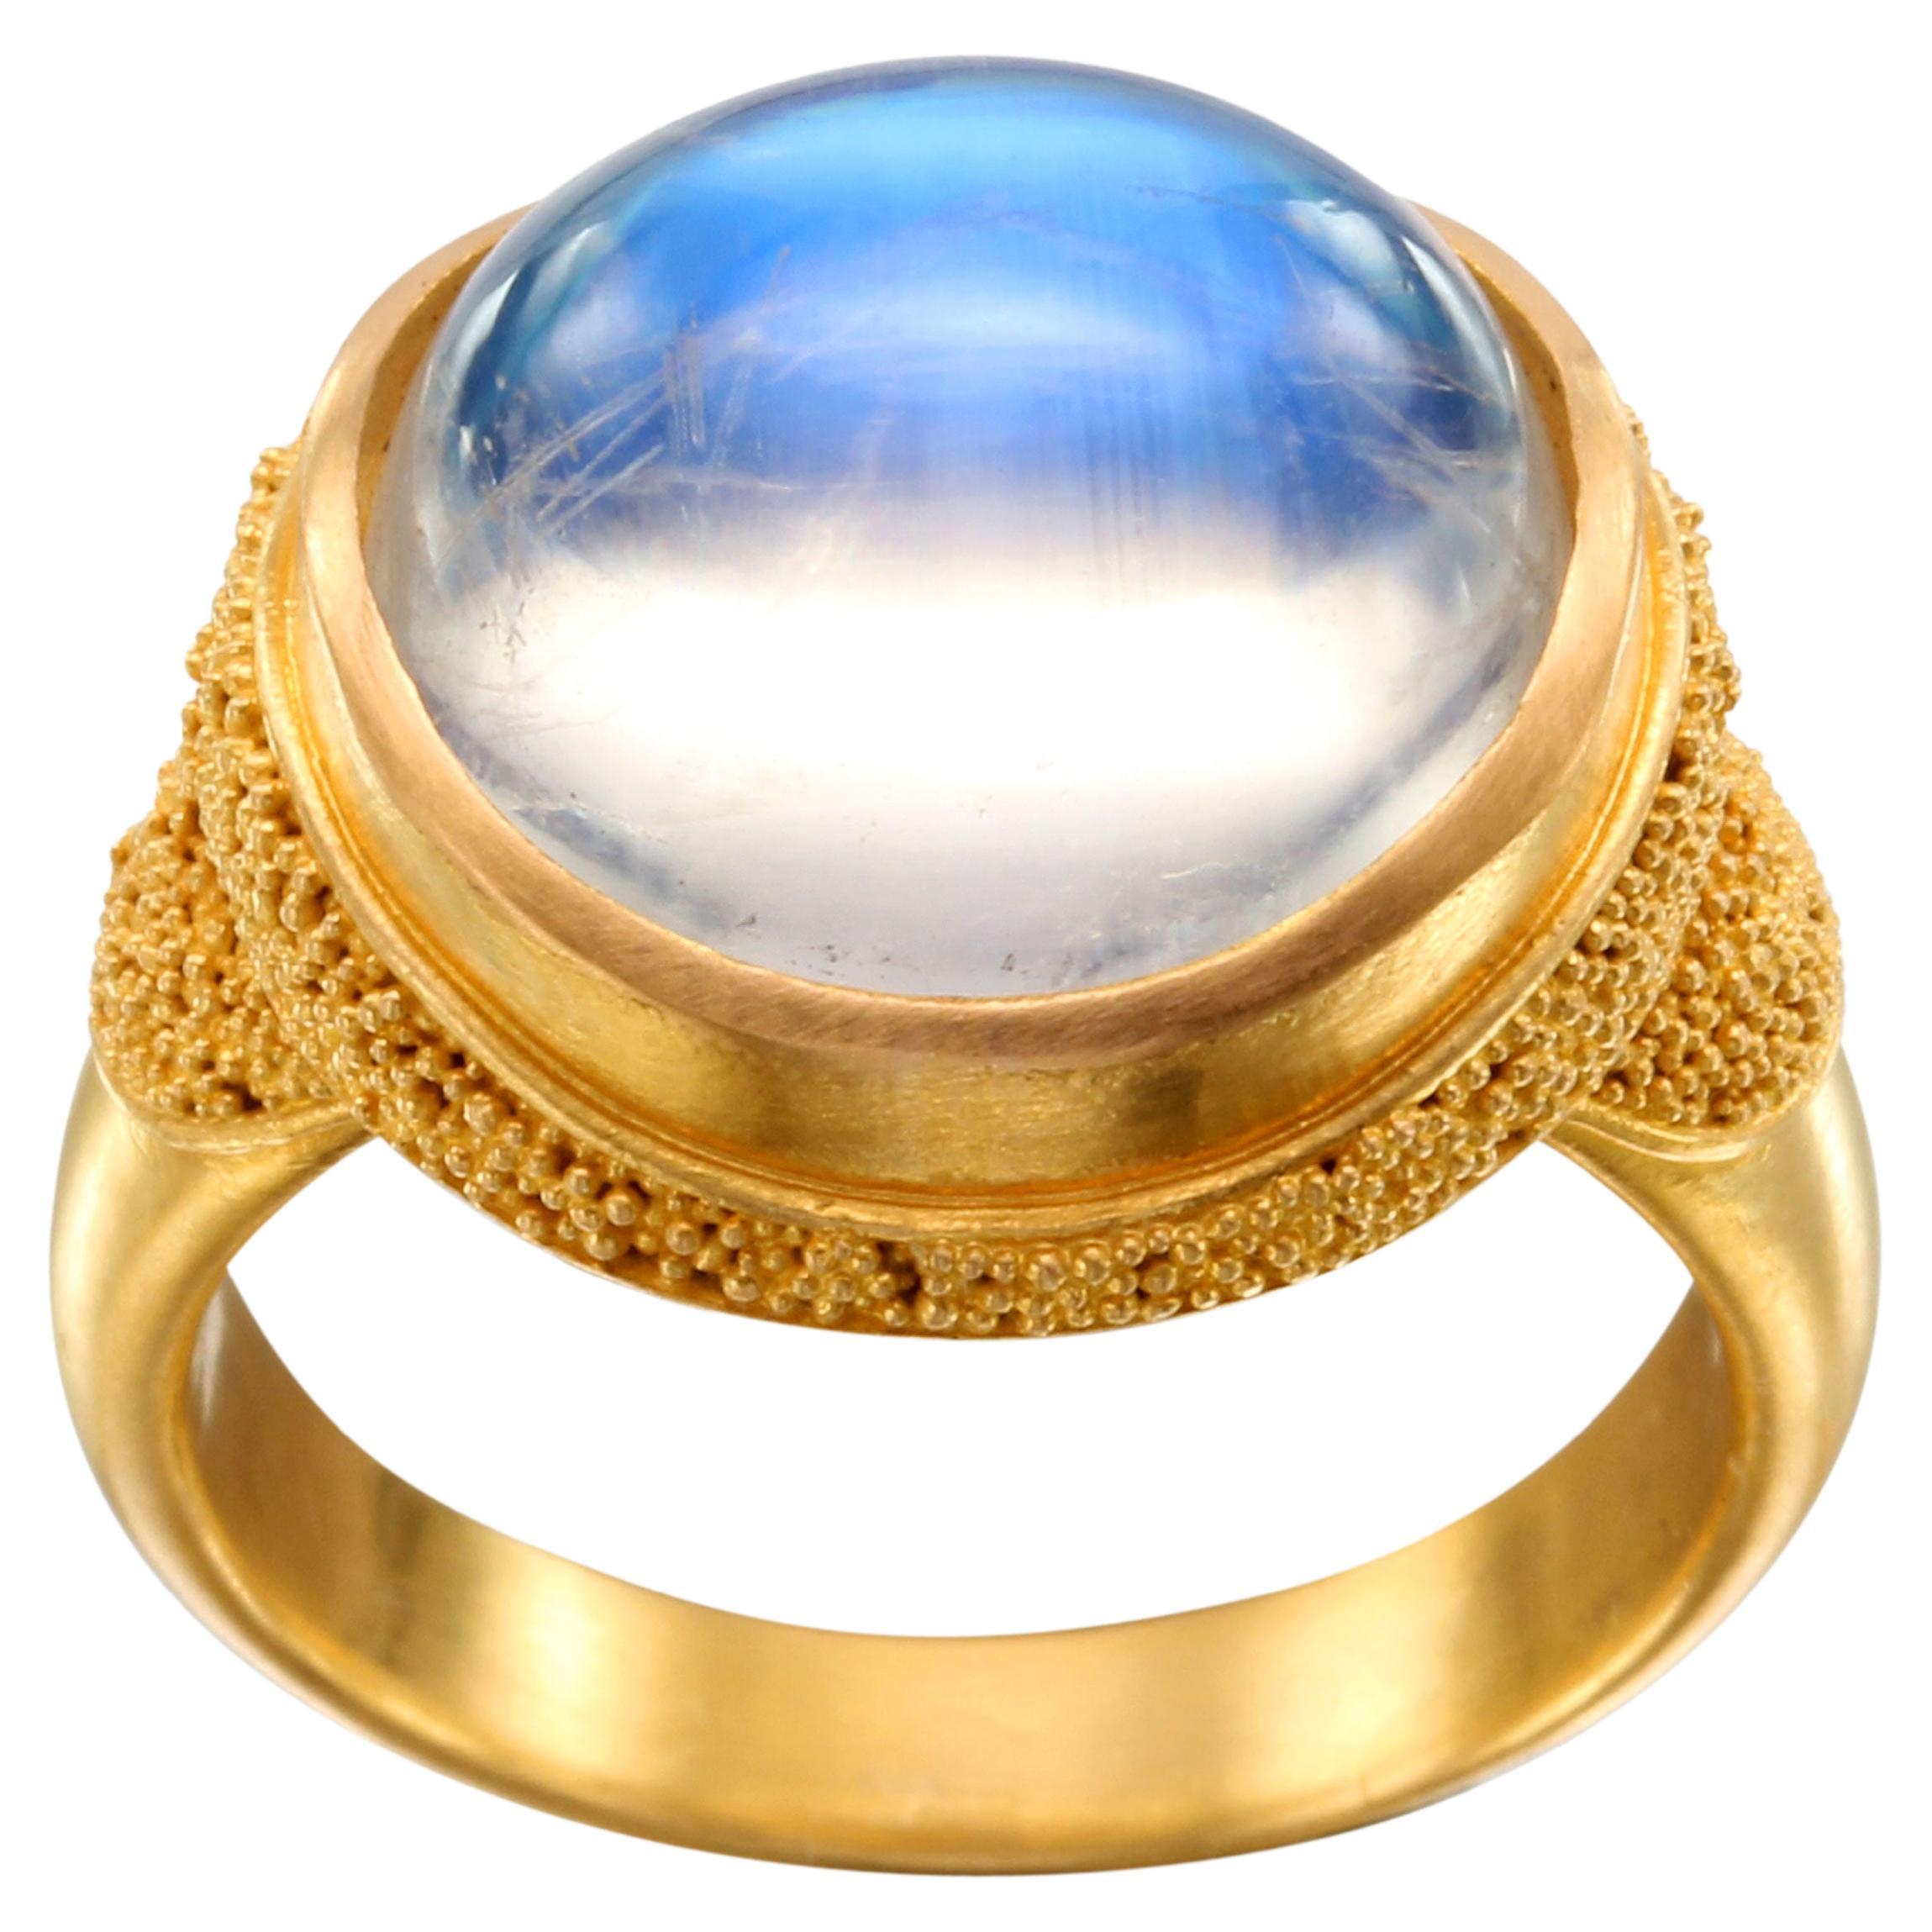 Steven Battelle 9.6 Carats Cabochon Rainbow Moonstone 22K Gold Ring 